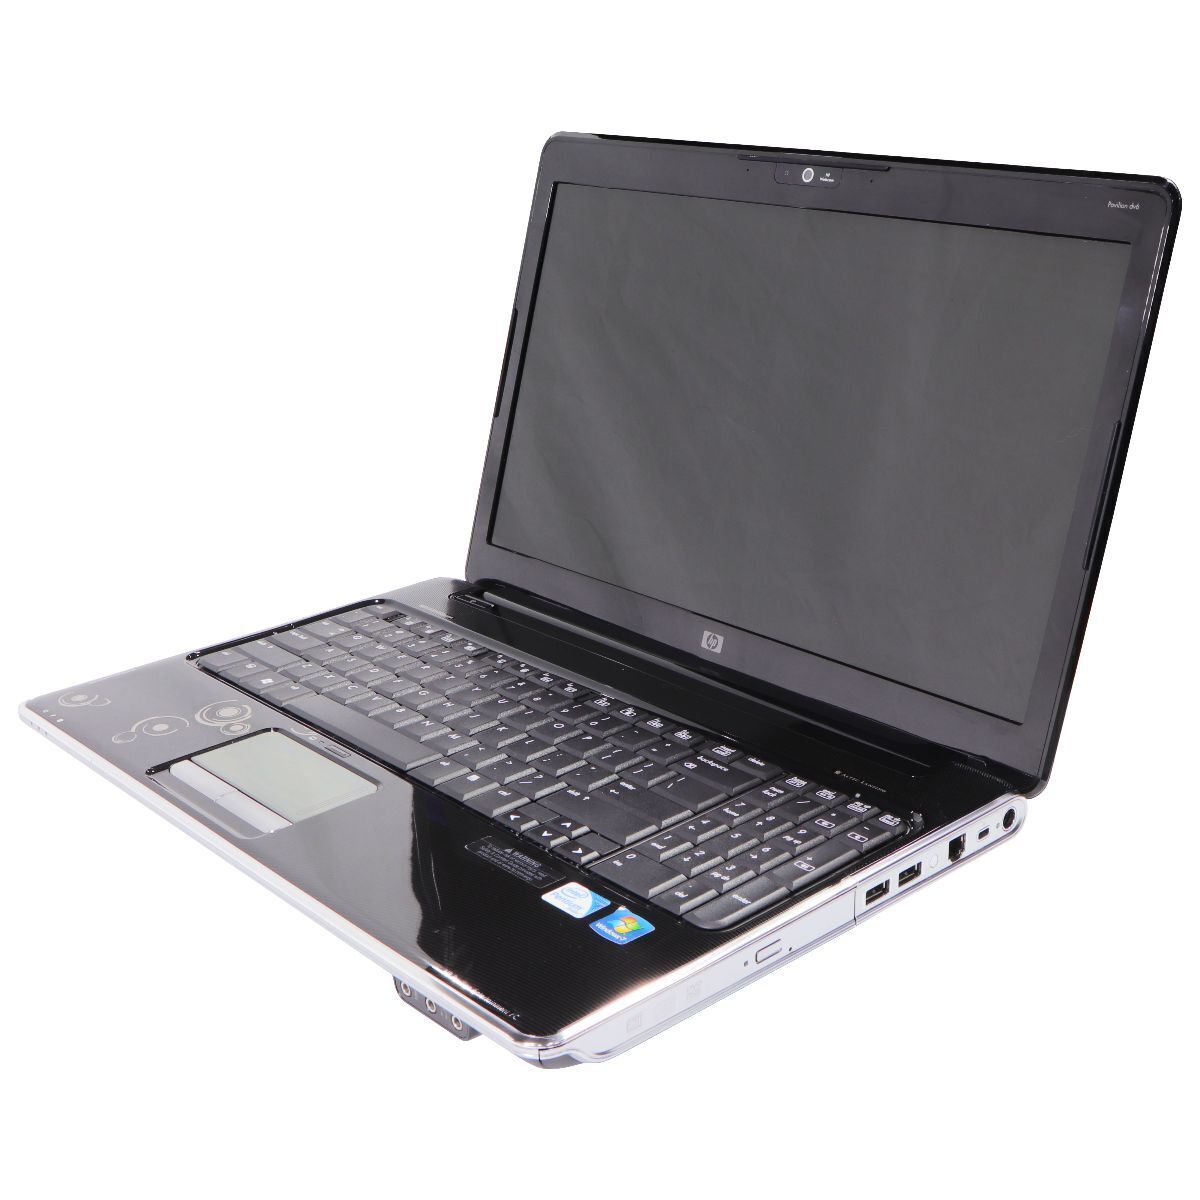 FAIR HP Pavilion (15.6-in) Laptop (DV6-2141ee) i5-430M/500GB/4GB/10 Home - Black